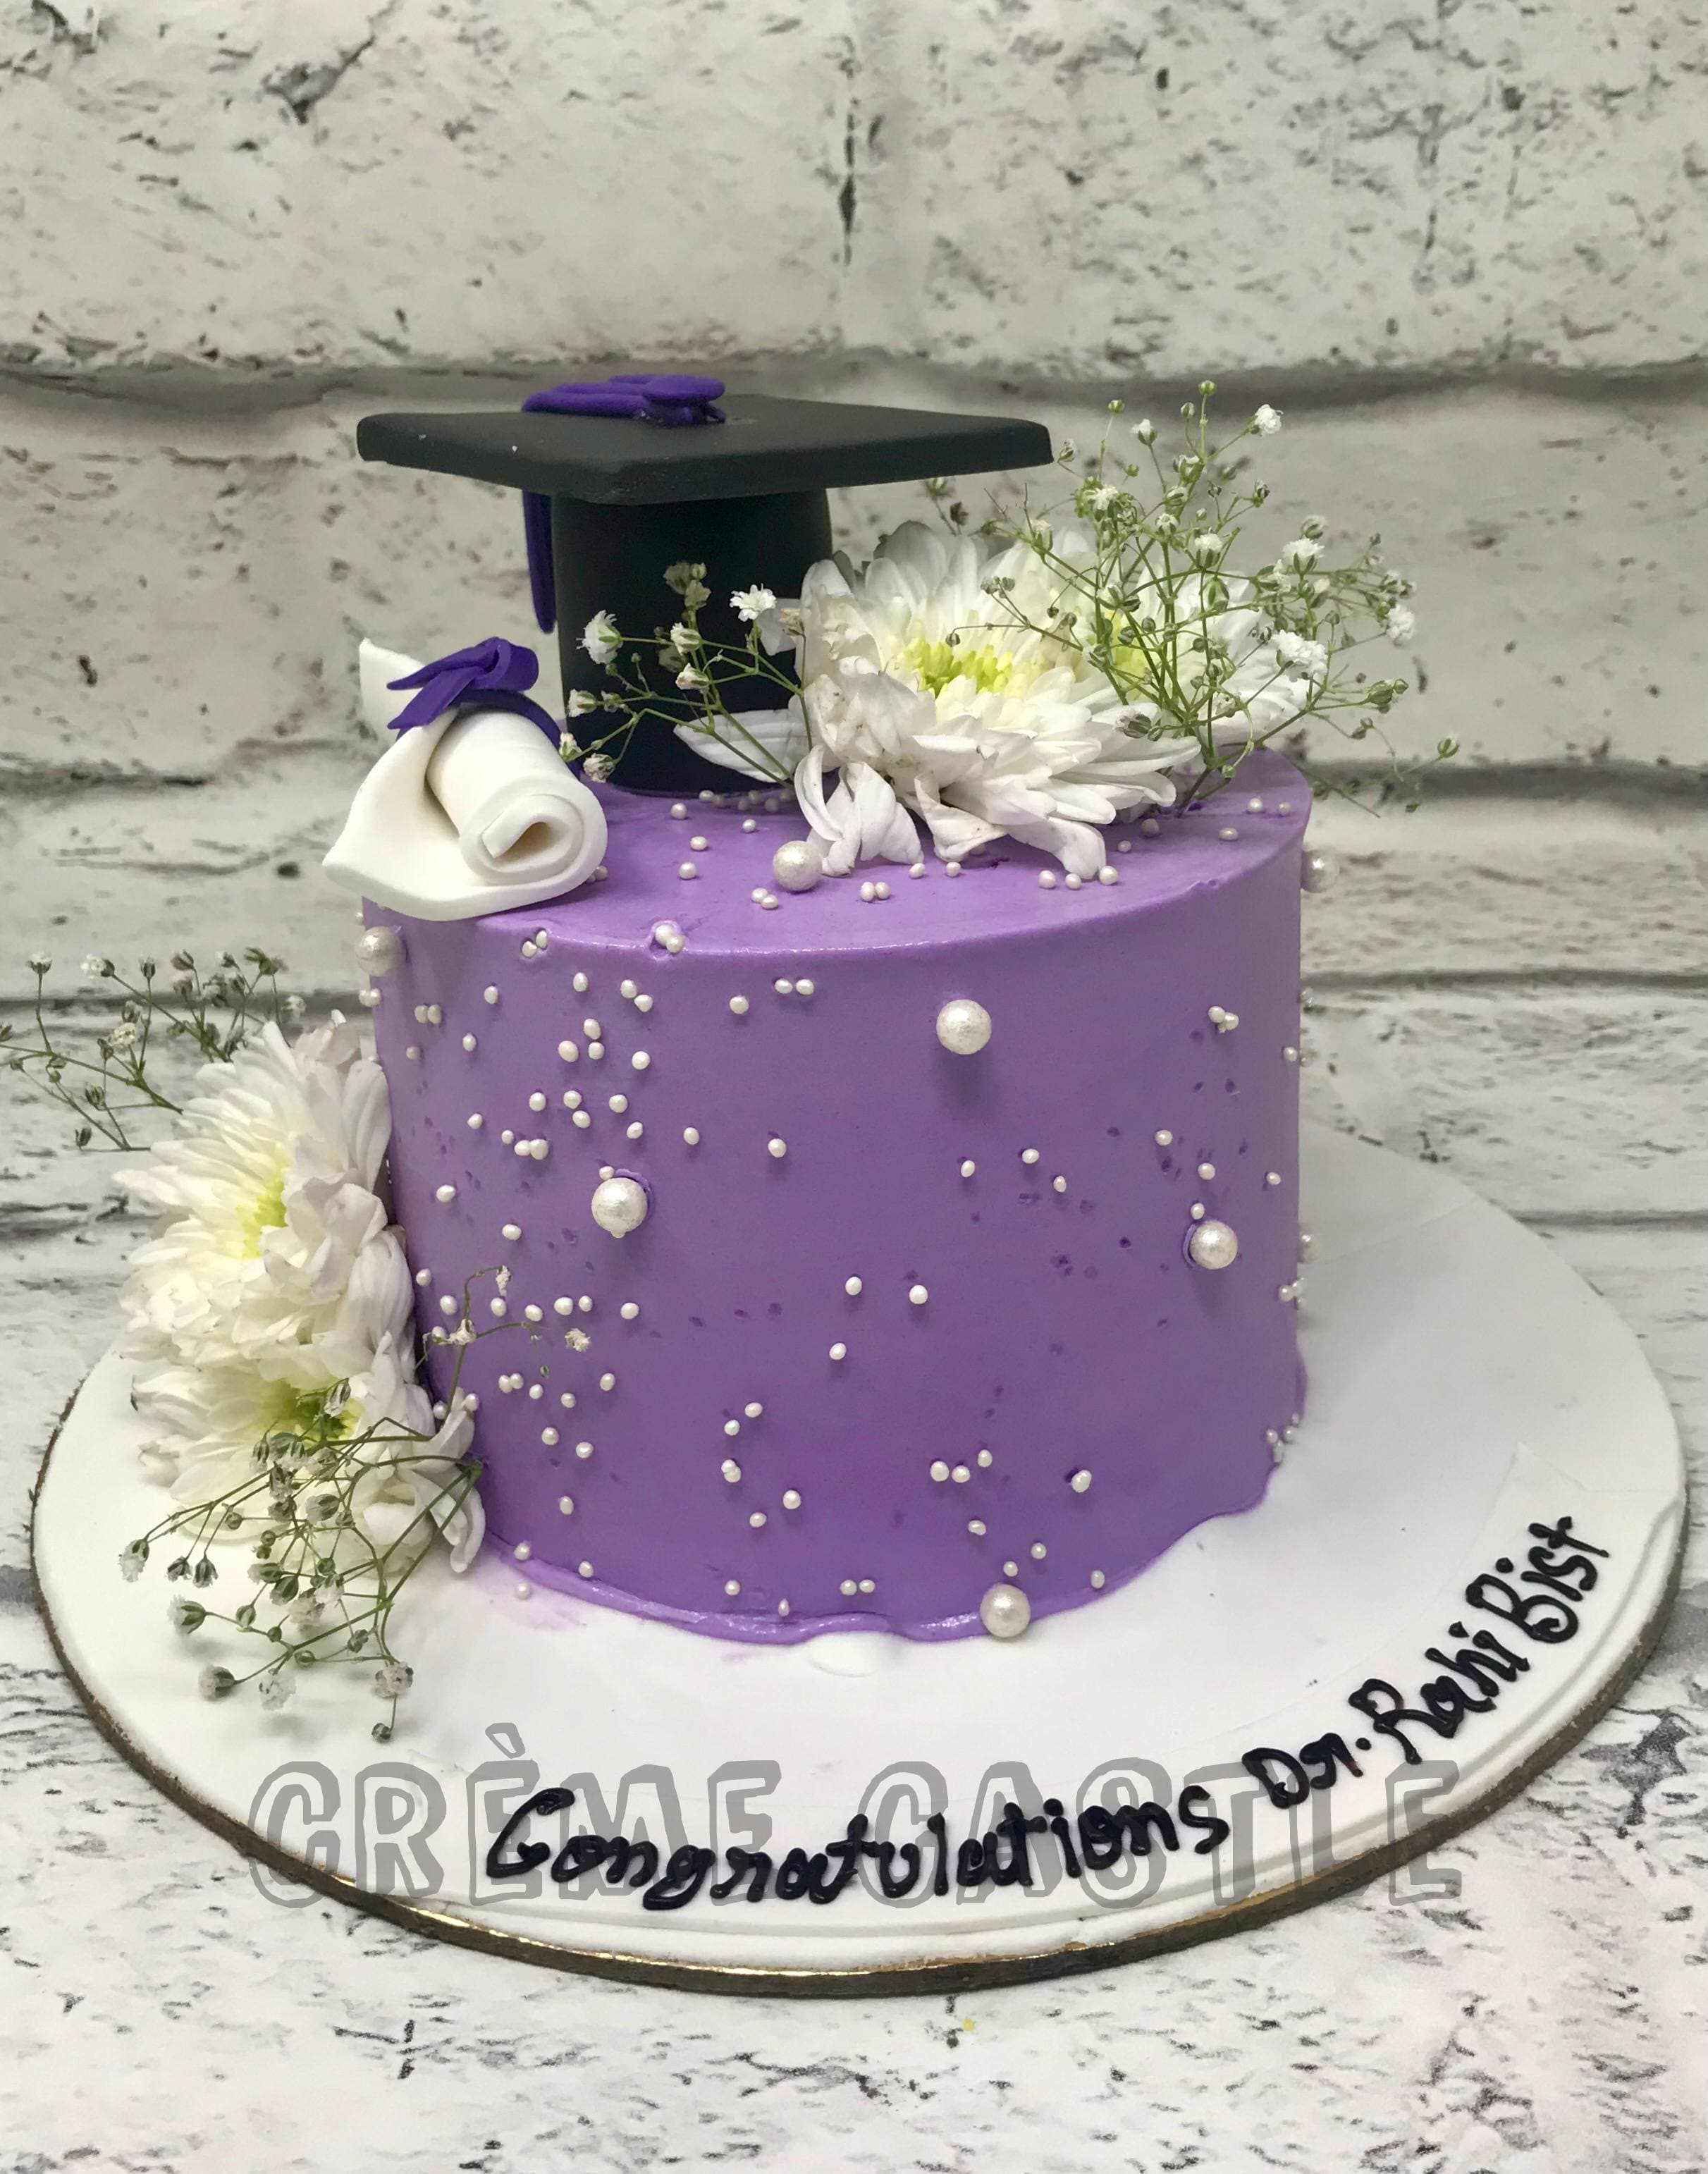 Simple fondant cake for Sofia's Graduation - My Culinary Adventures